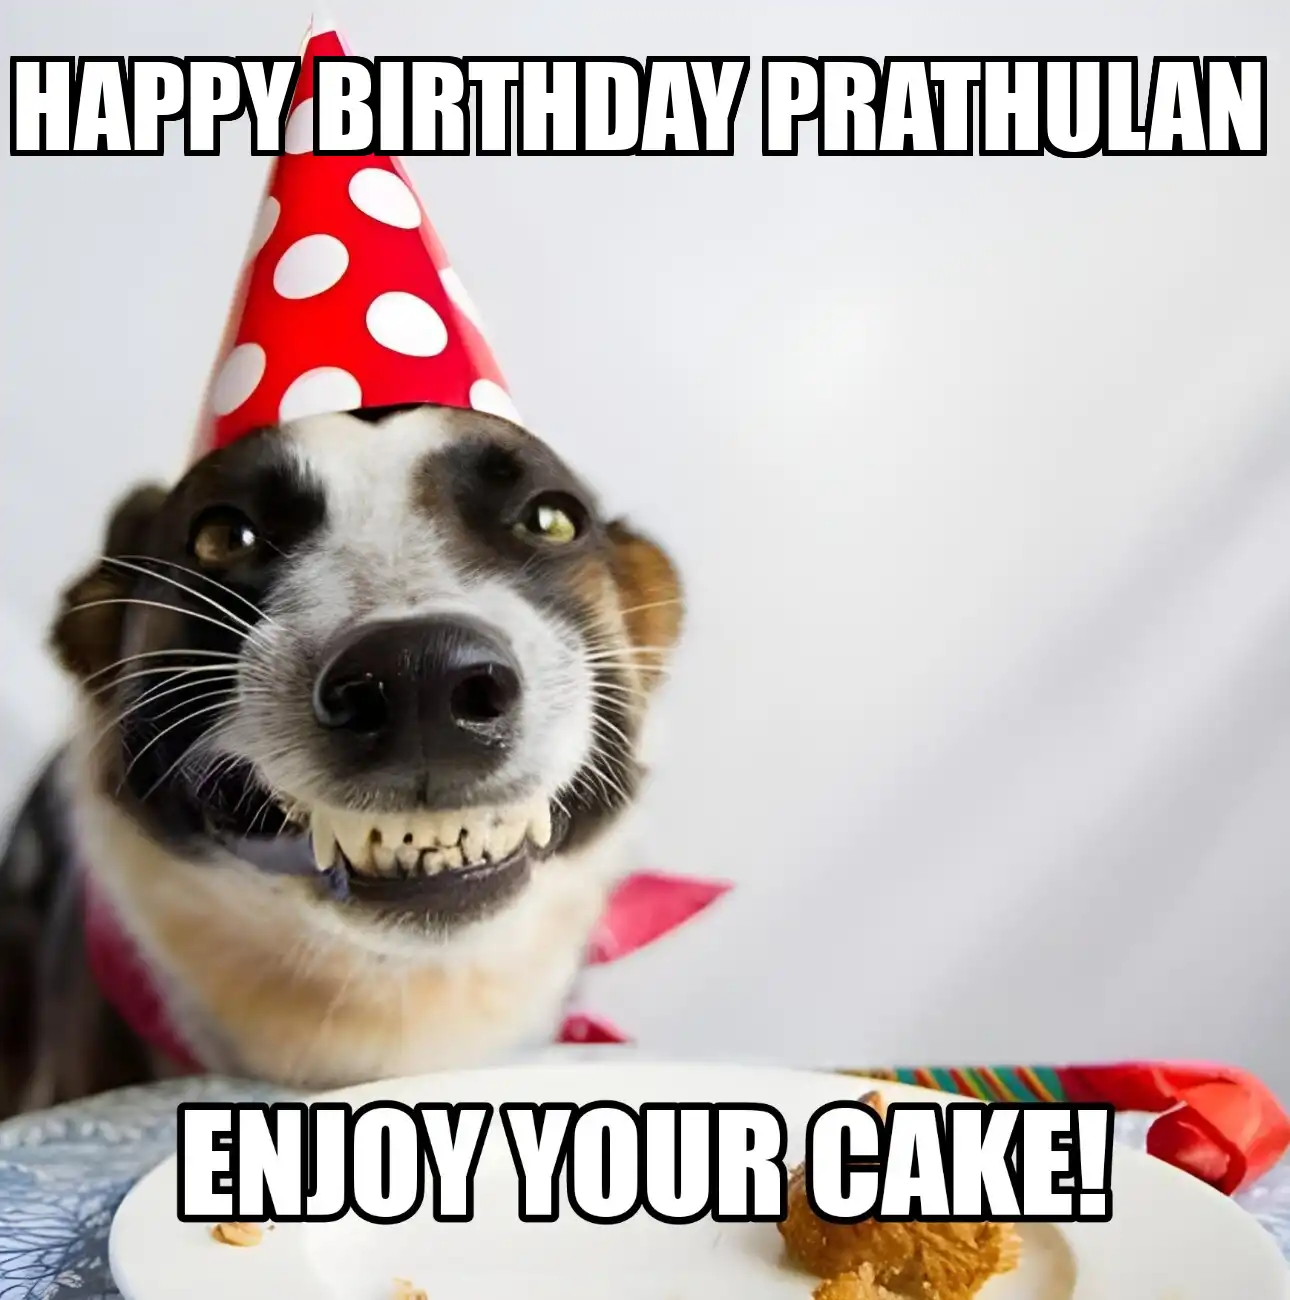 Happy Birthday Prathulan Enjoy Your Cake Dog Meme